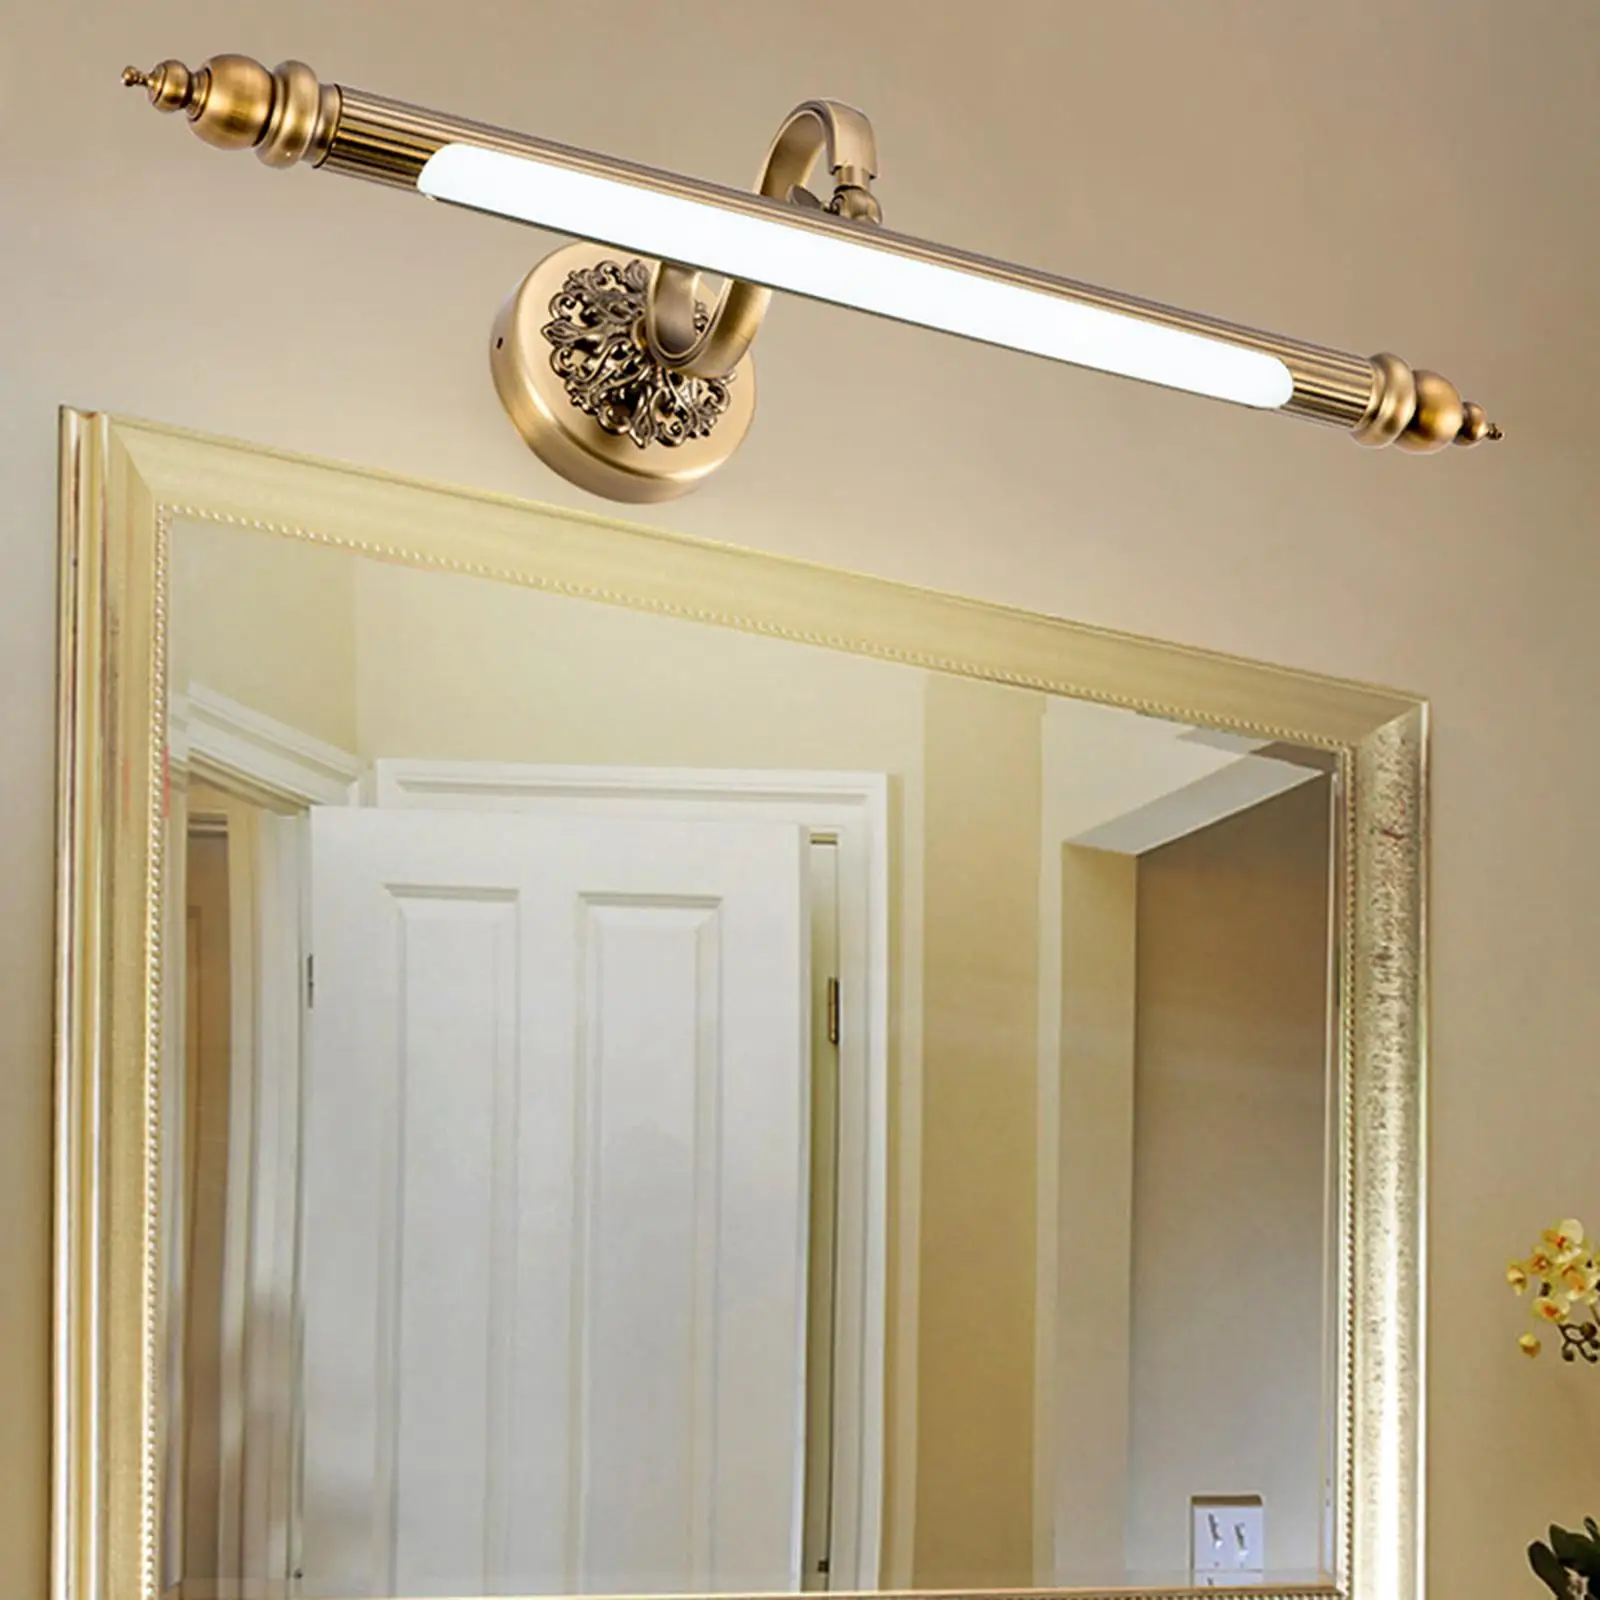 Wired LED Mirror Light Adjustable Mirror Lighting Fixture Reading Lamp Vanity Lighting Light for Bedroom Bathroom Indoor Hotel